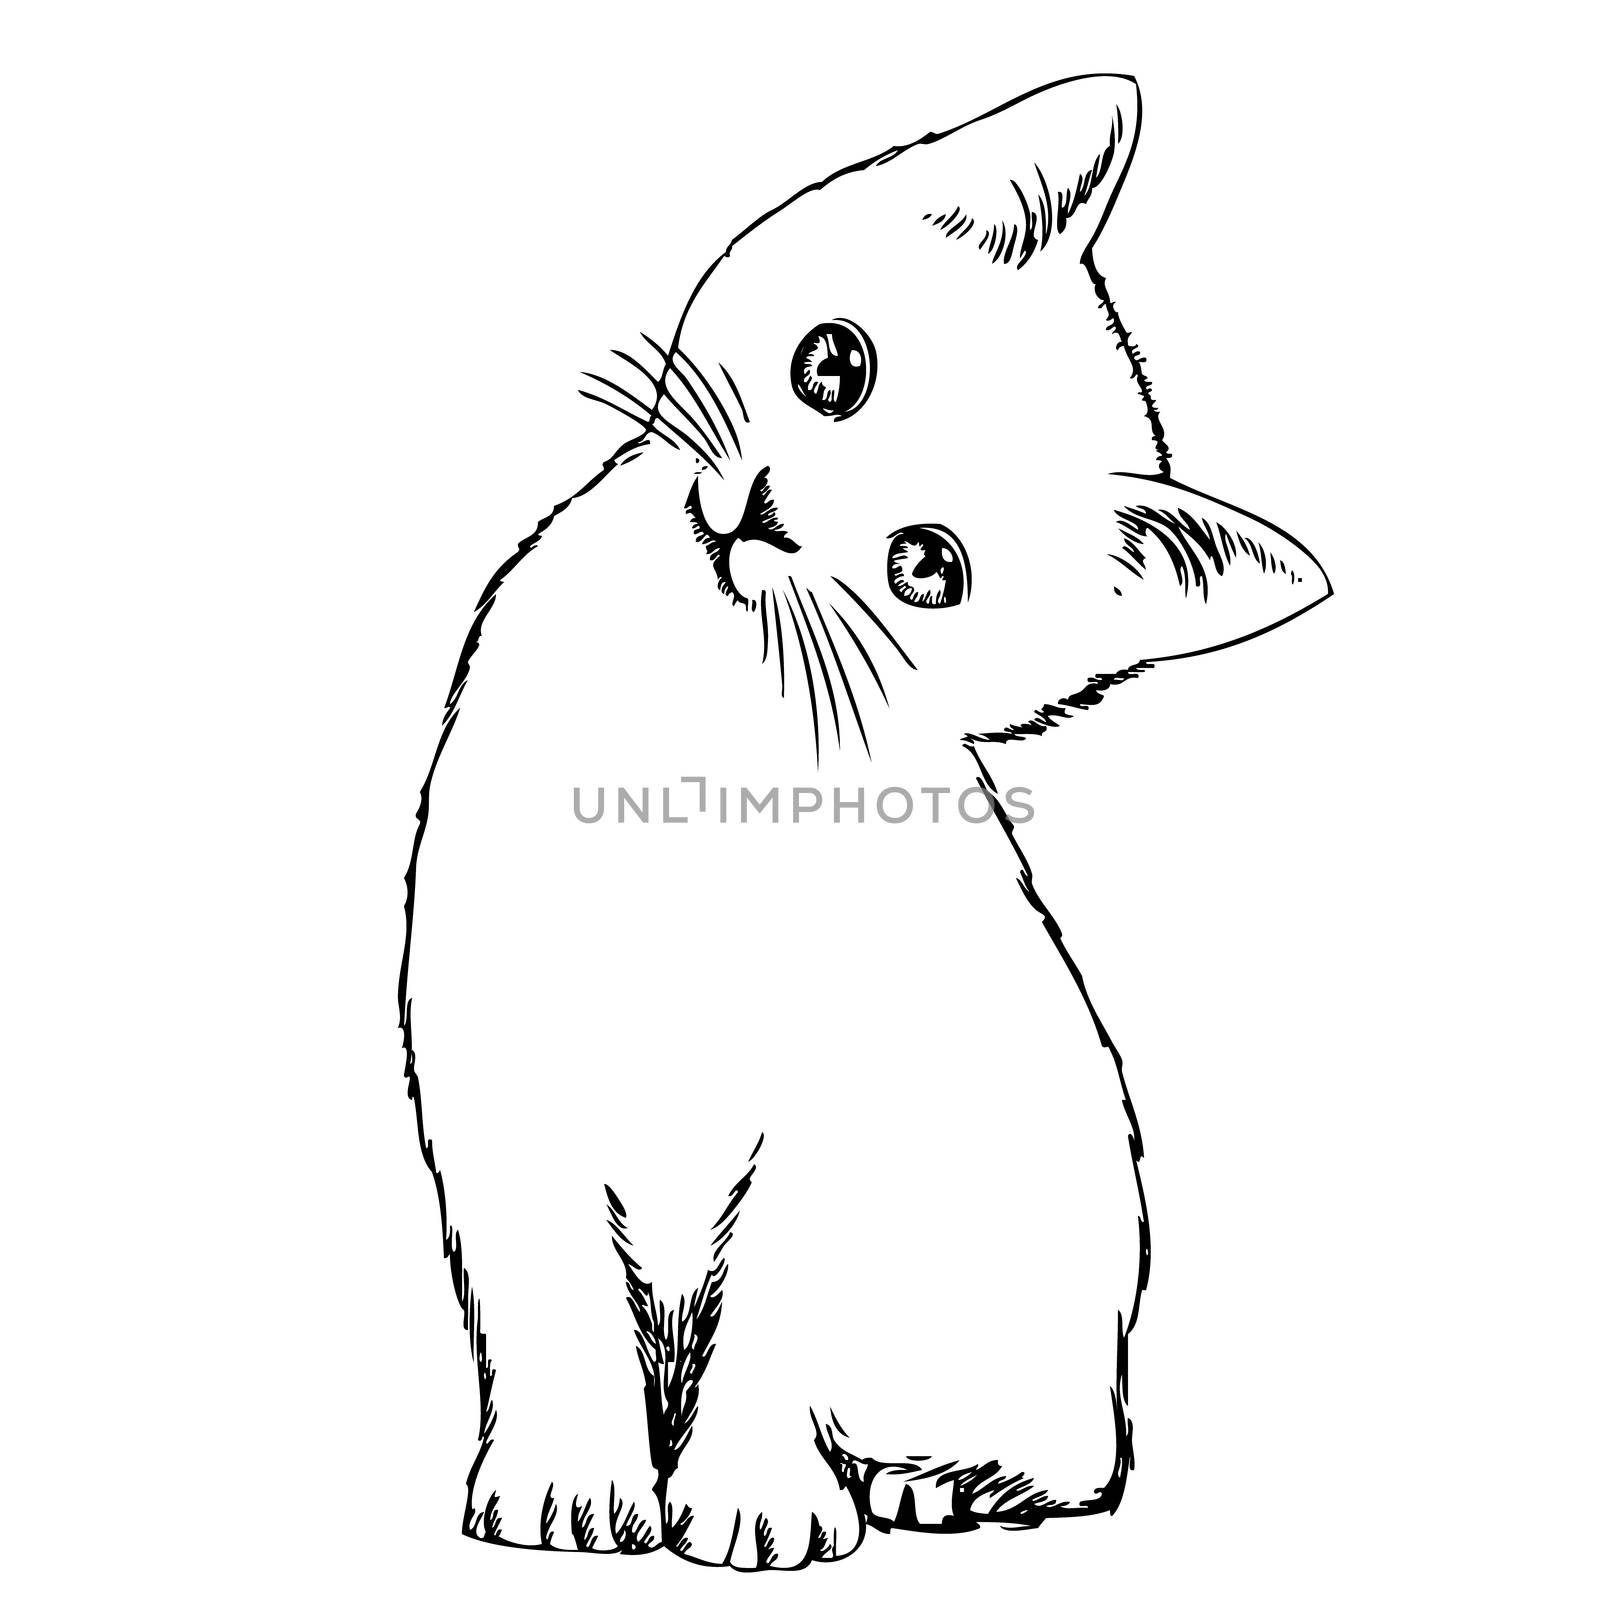 freehand sketch illustration of cat, kitten , outline, doodle hand drawn